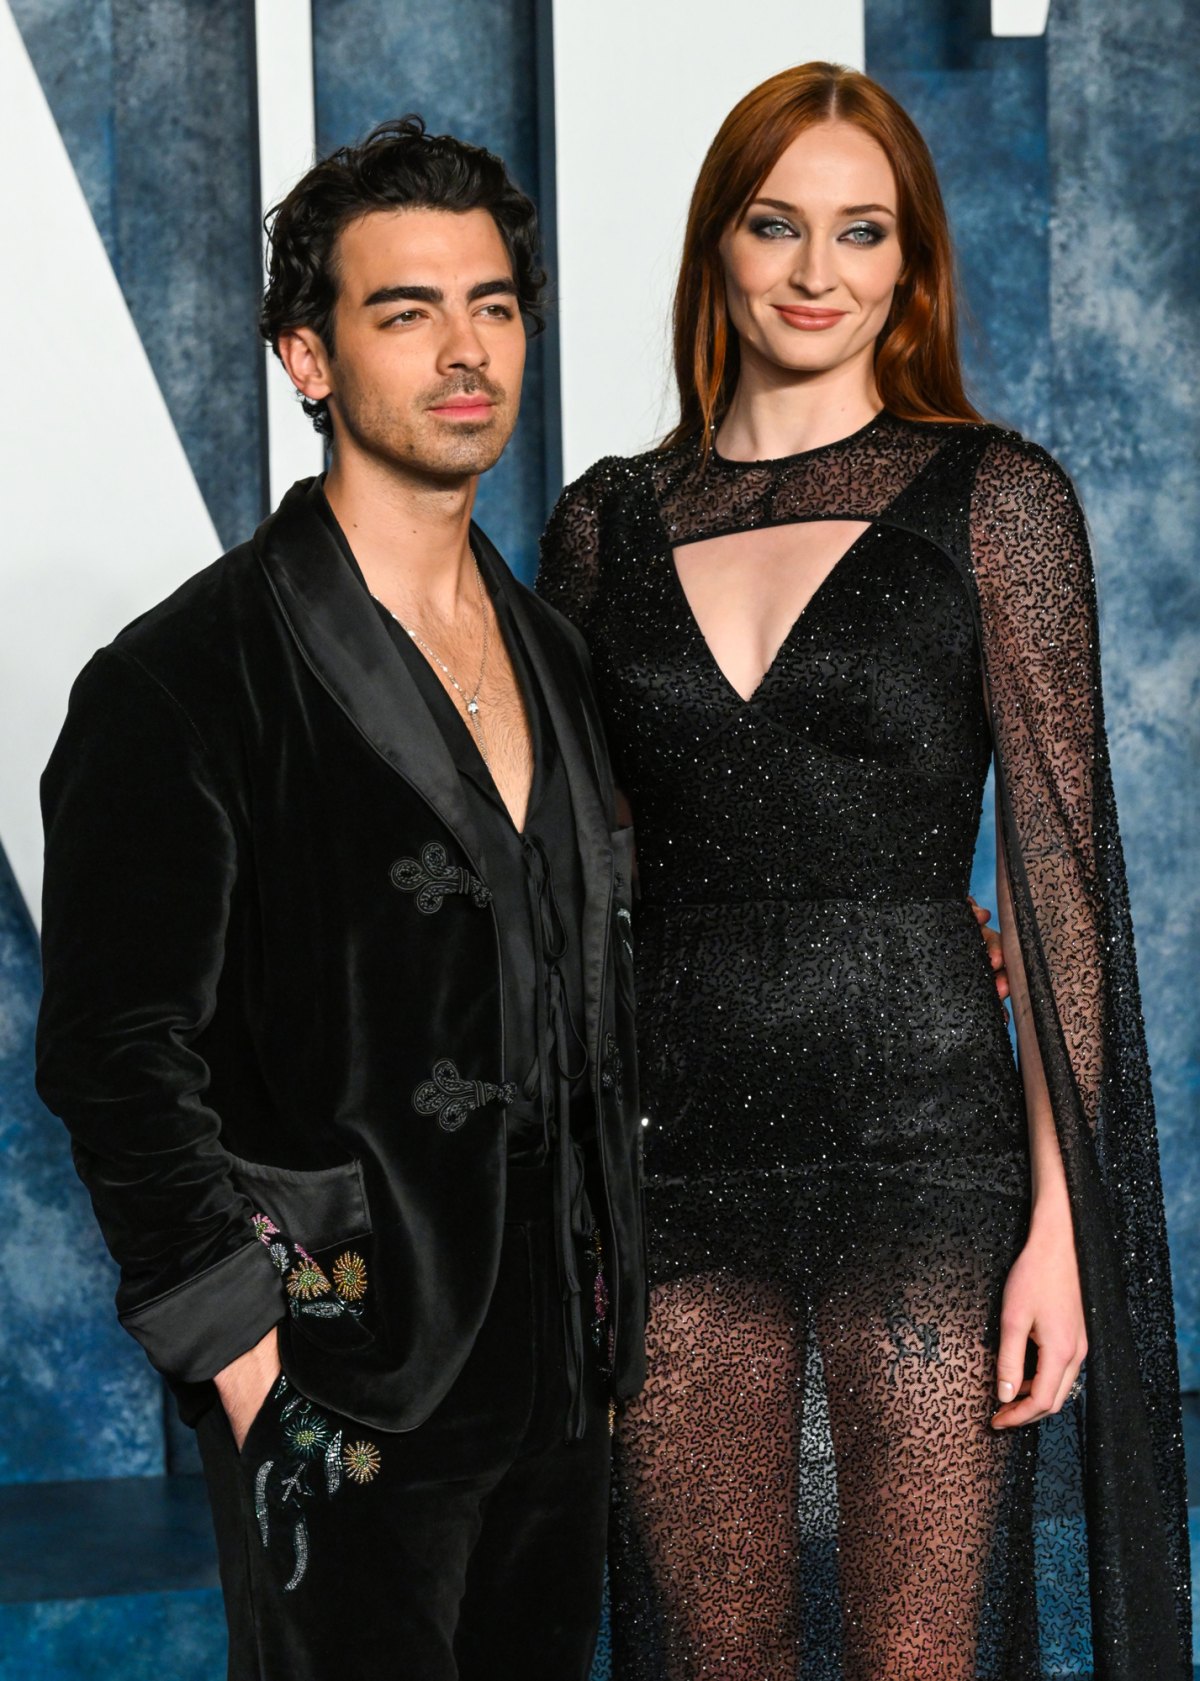 Joe Jonas and Sophie Turner Make Their Glam Return to the Red Carpet